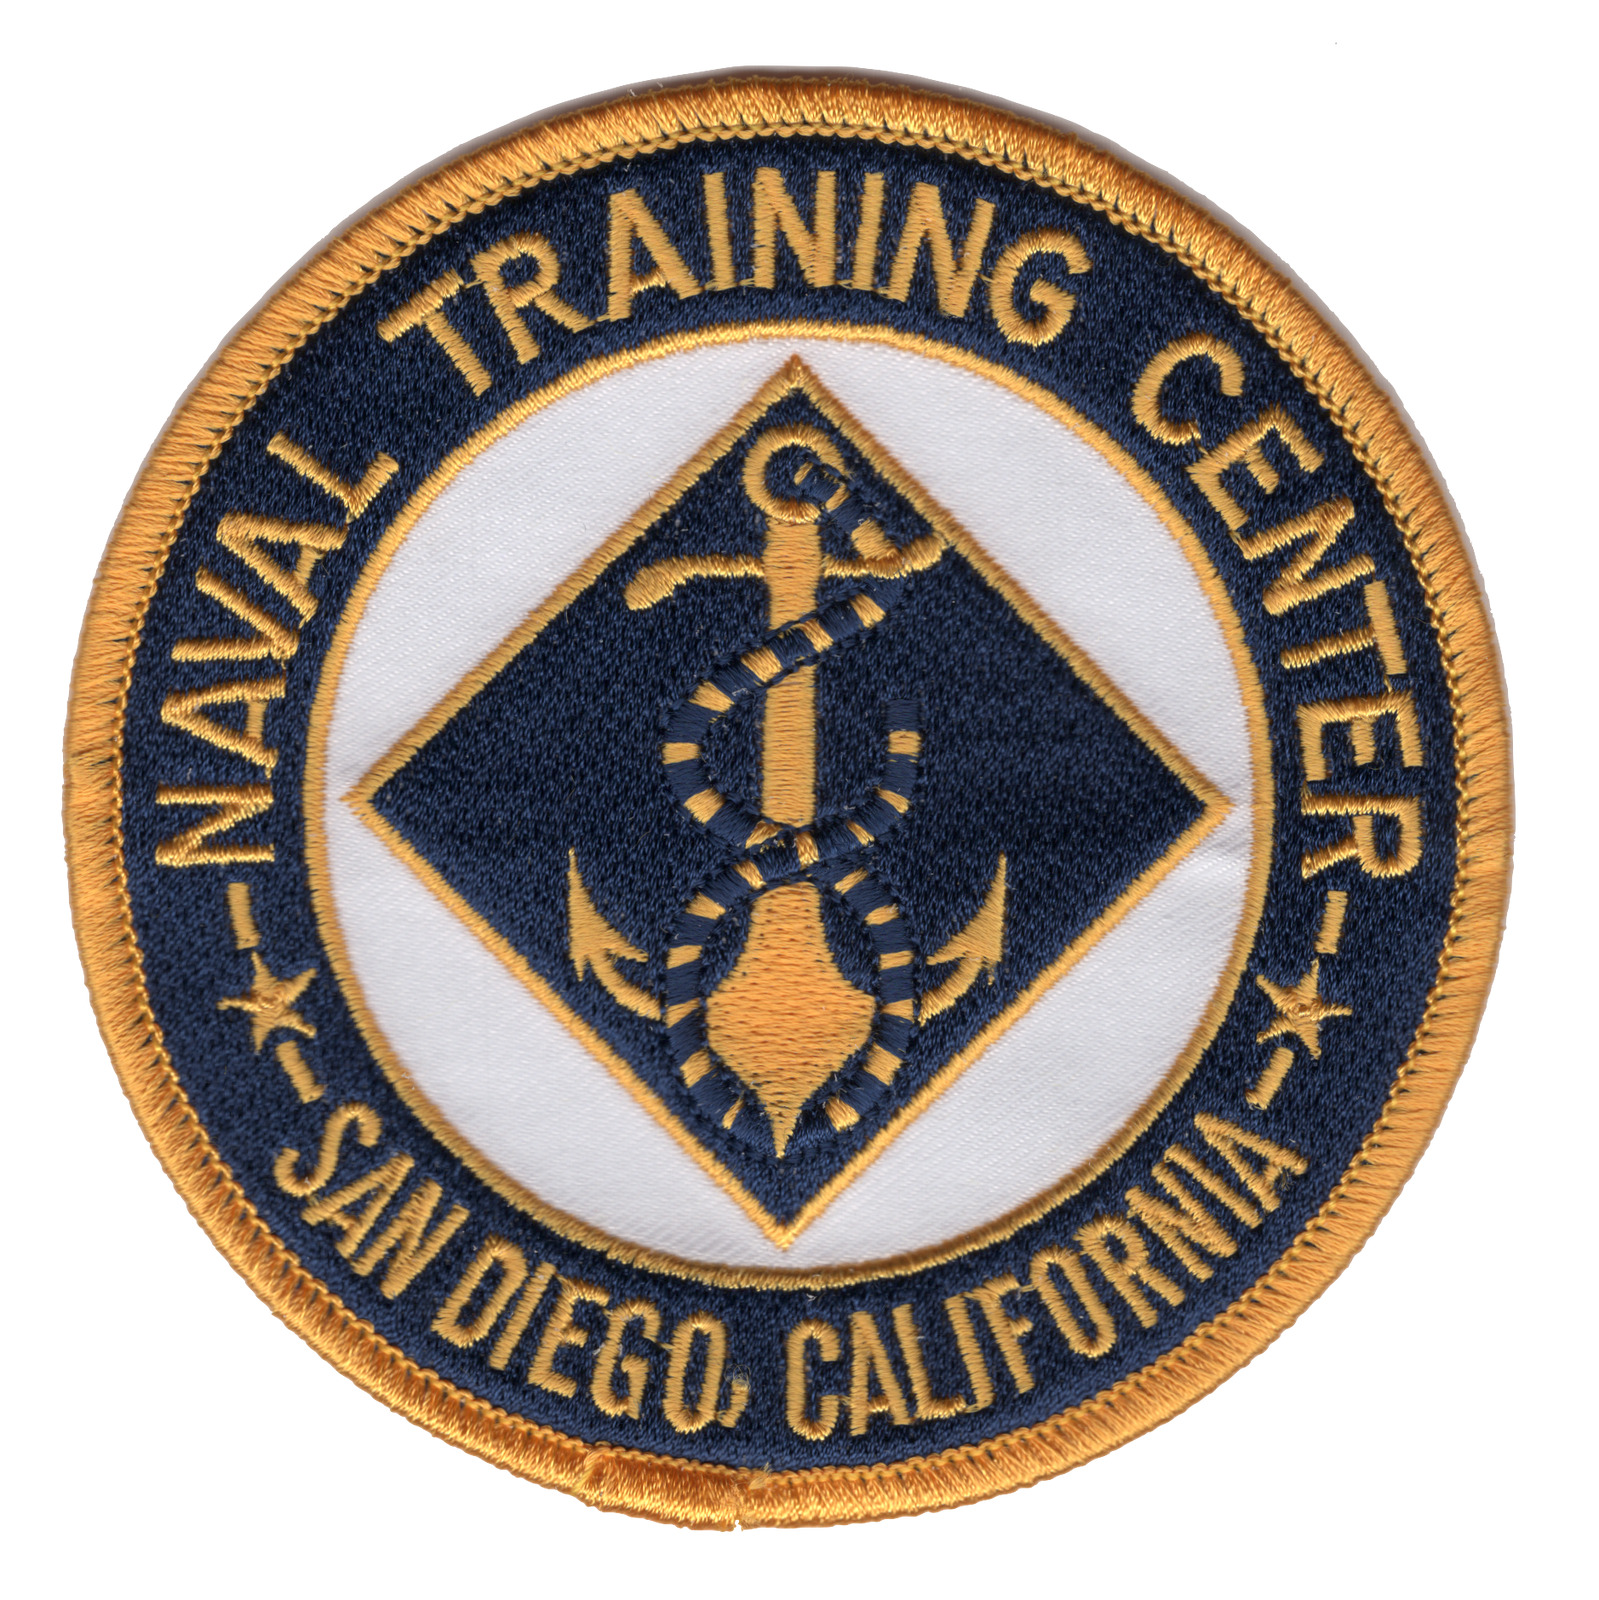 Naval Training Center San Diego California Patch